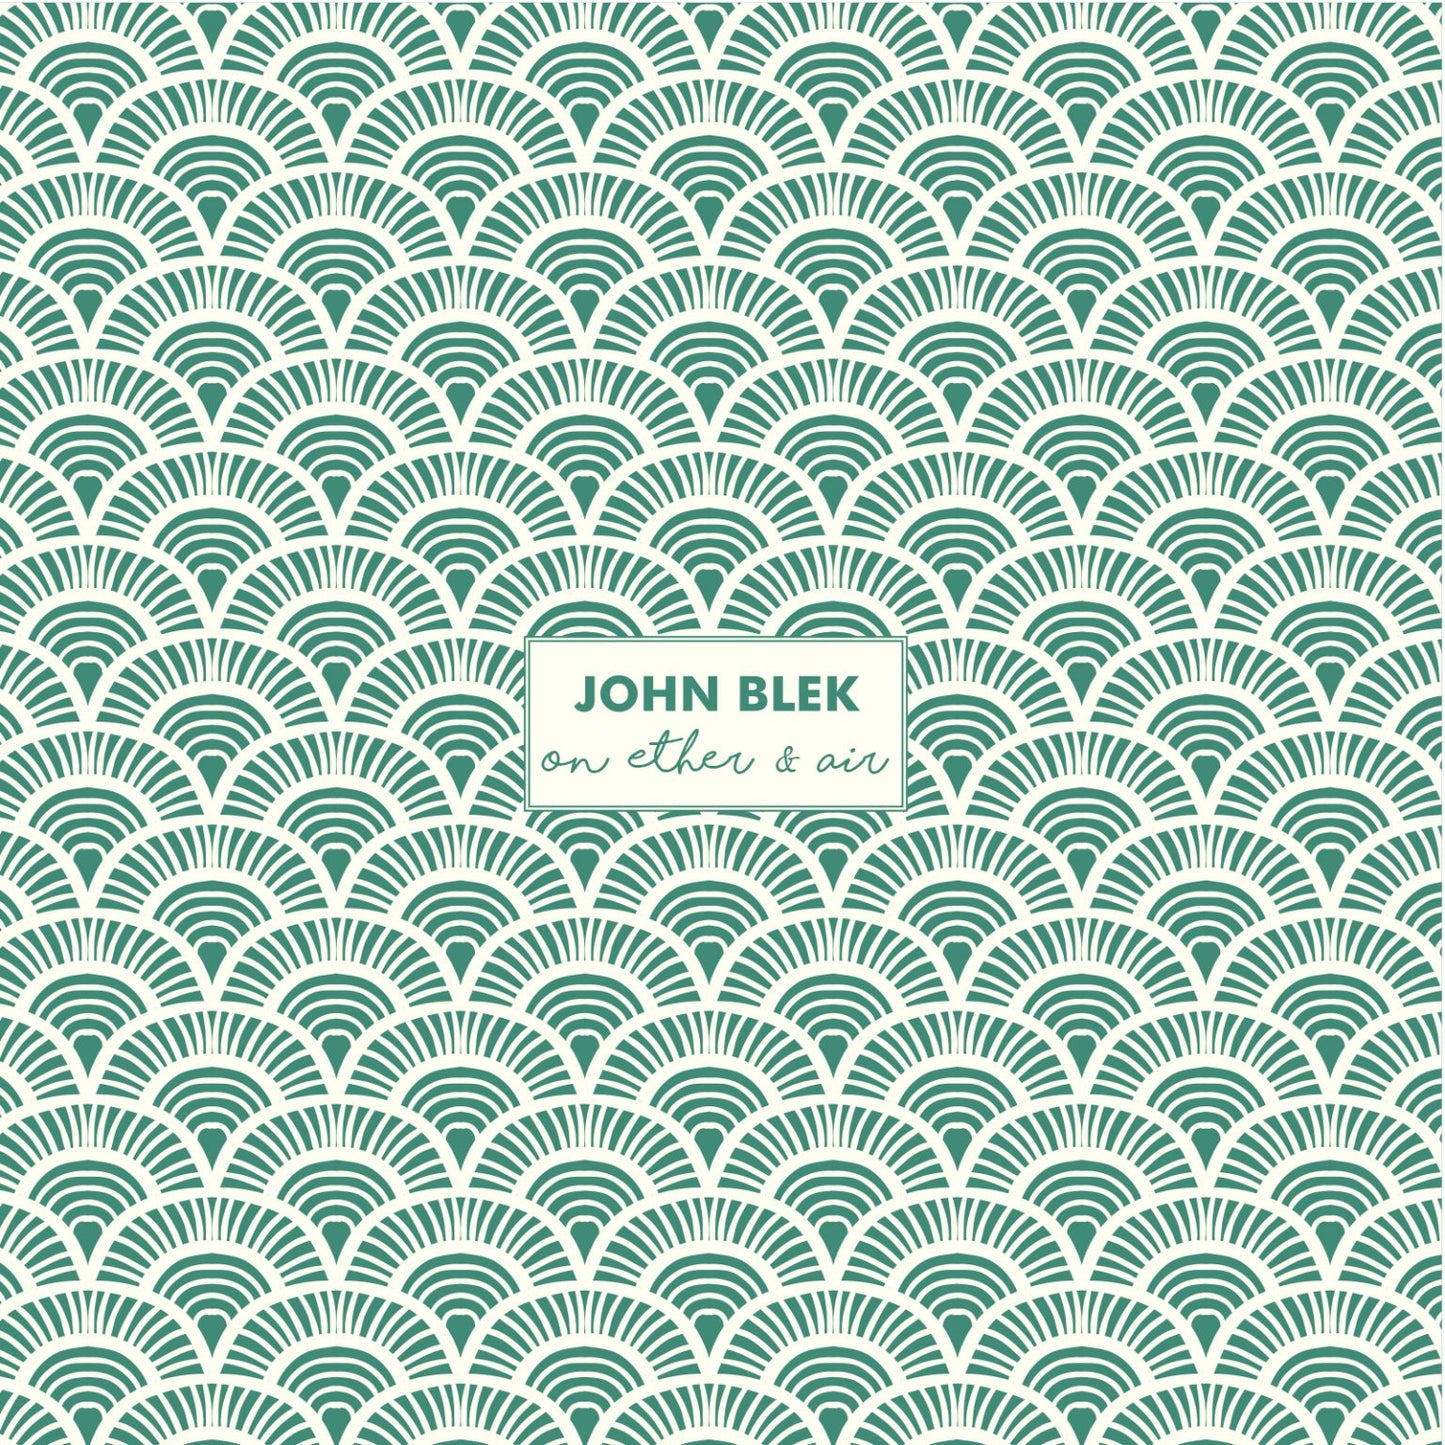 John Blek On Ether and Air - Ireland Vinyl